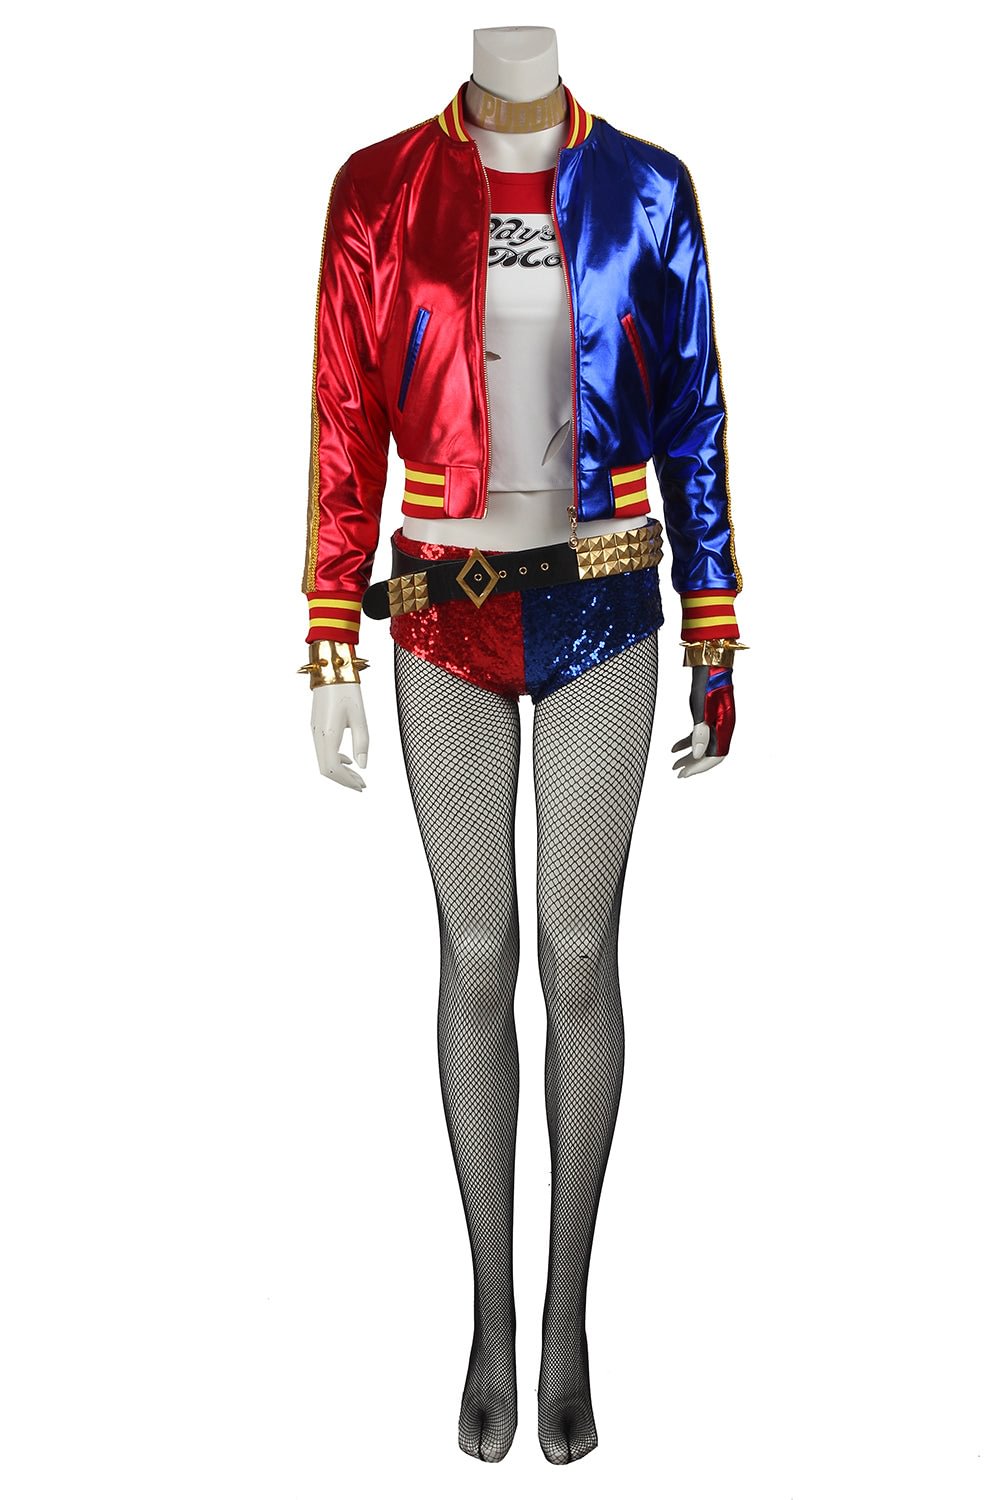 Batman Harley Quinn Cosplay Costume